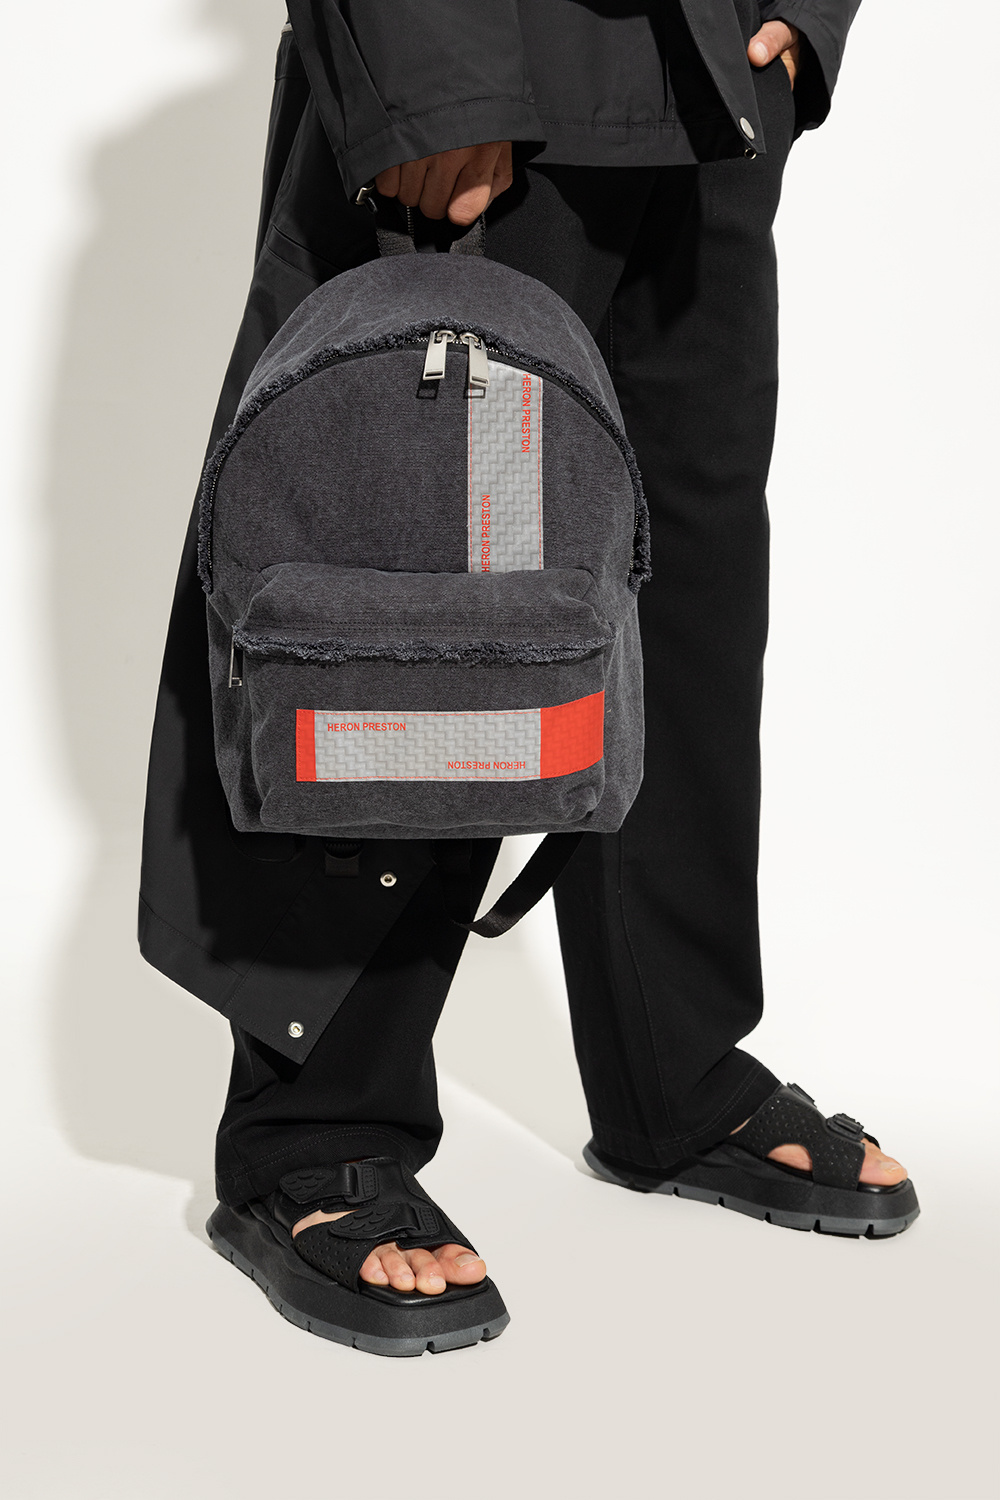 Heron Preston Baggallini 3 in1 Convertible Backpack